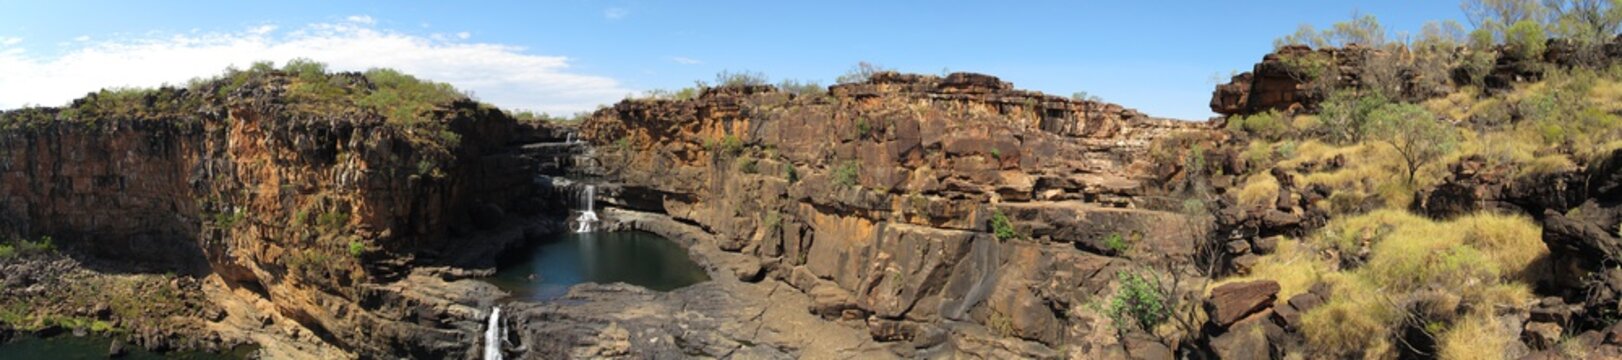 mitchell falls, kimberley, western australia